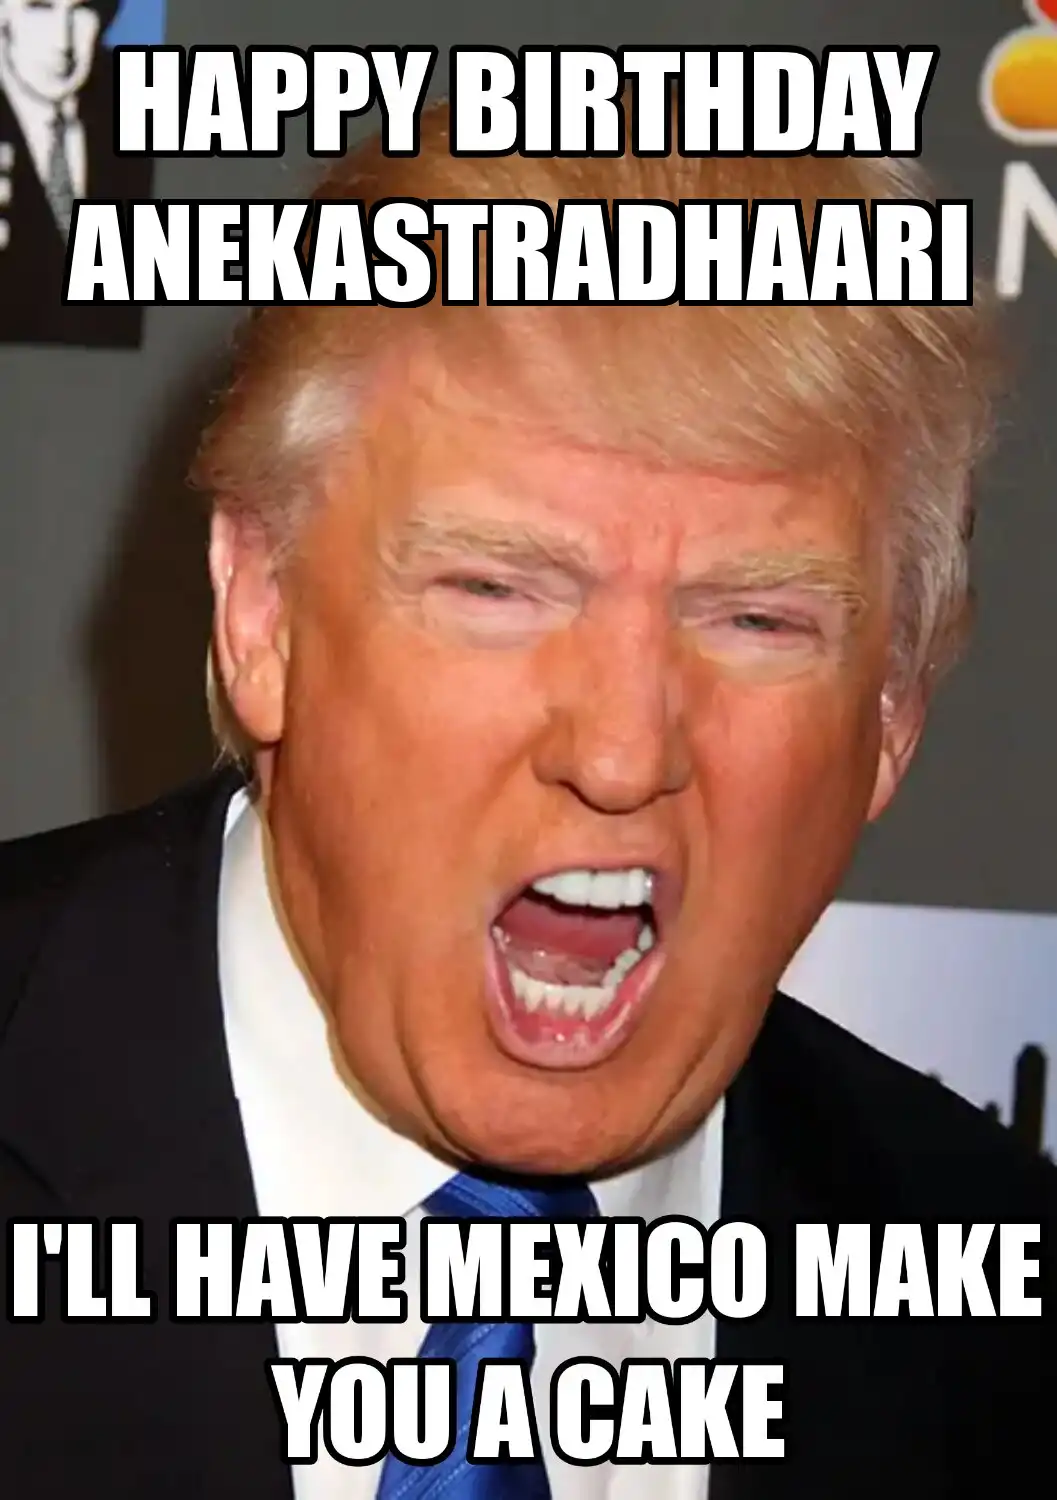 Happy Birthday Anekastradhaari Mexico Make You A Cake Meme